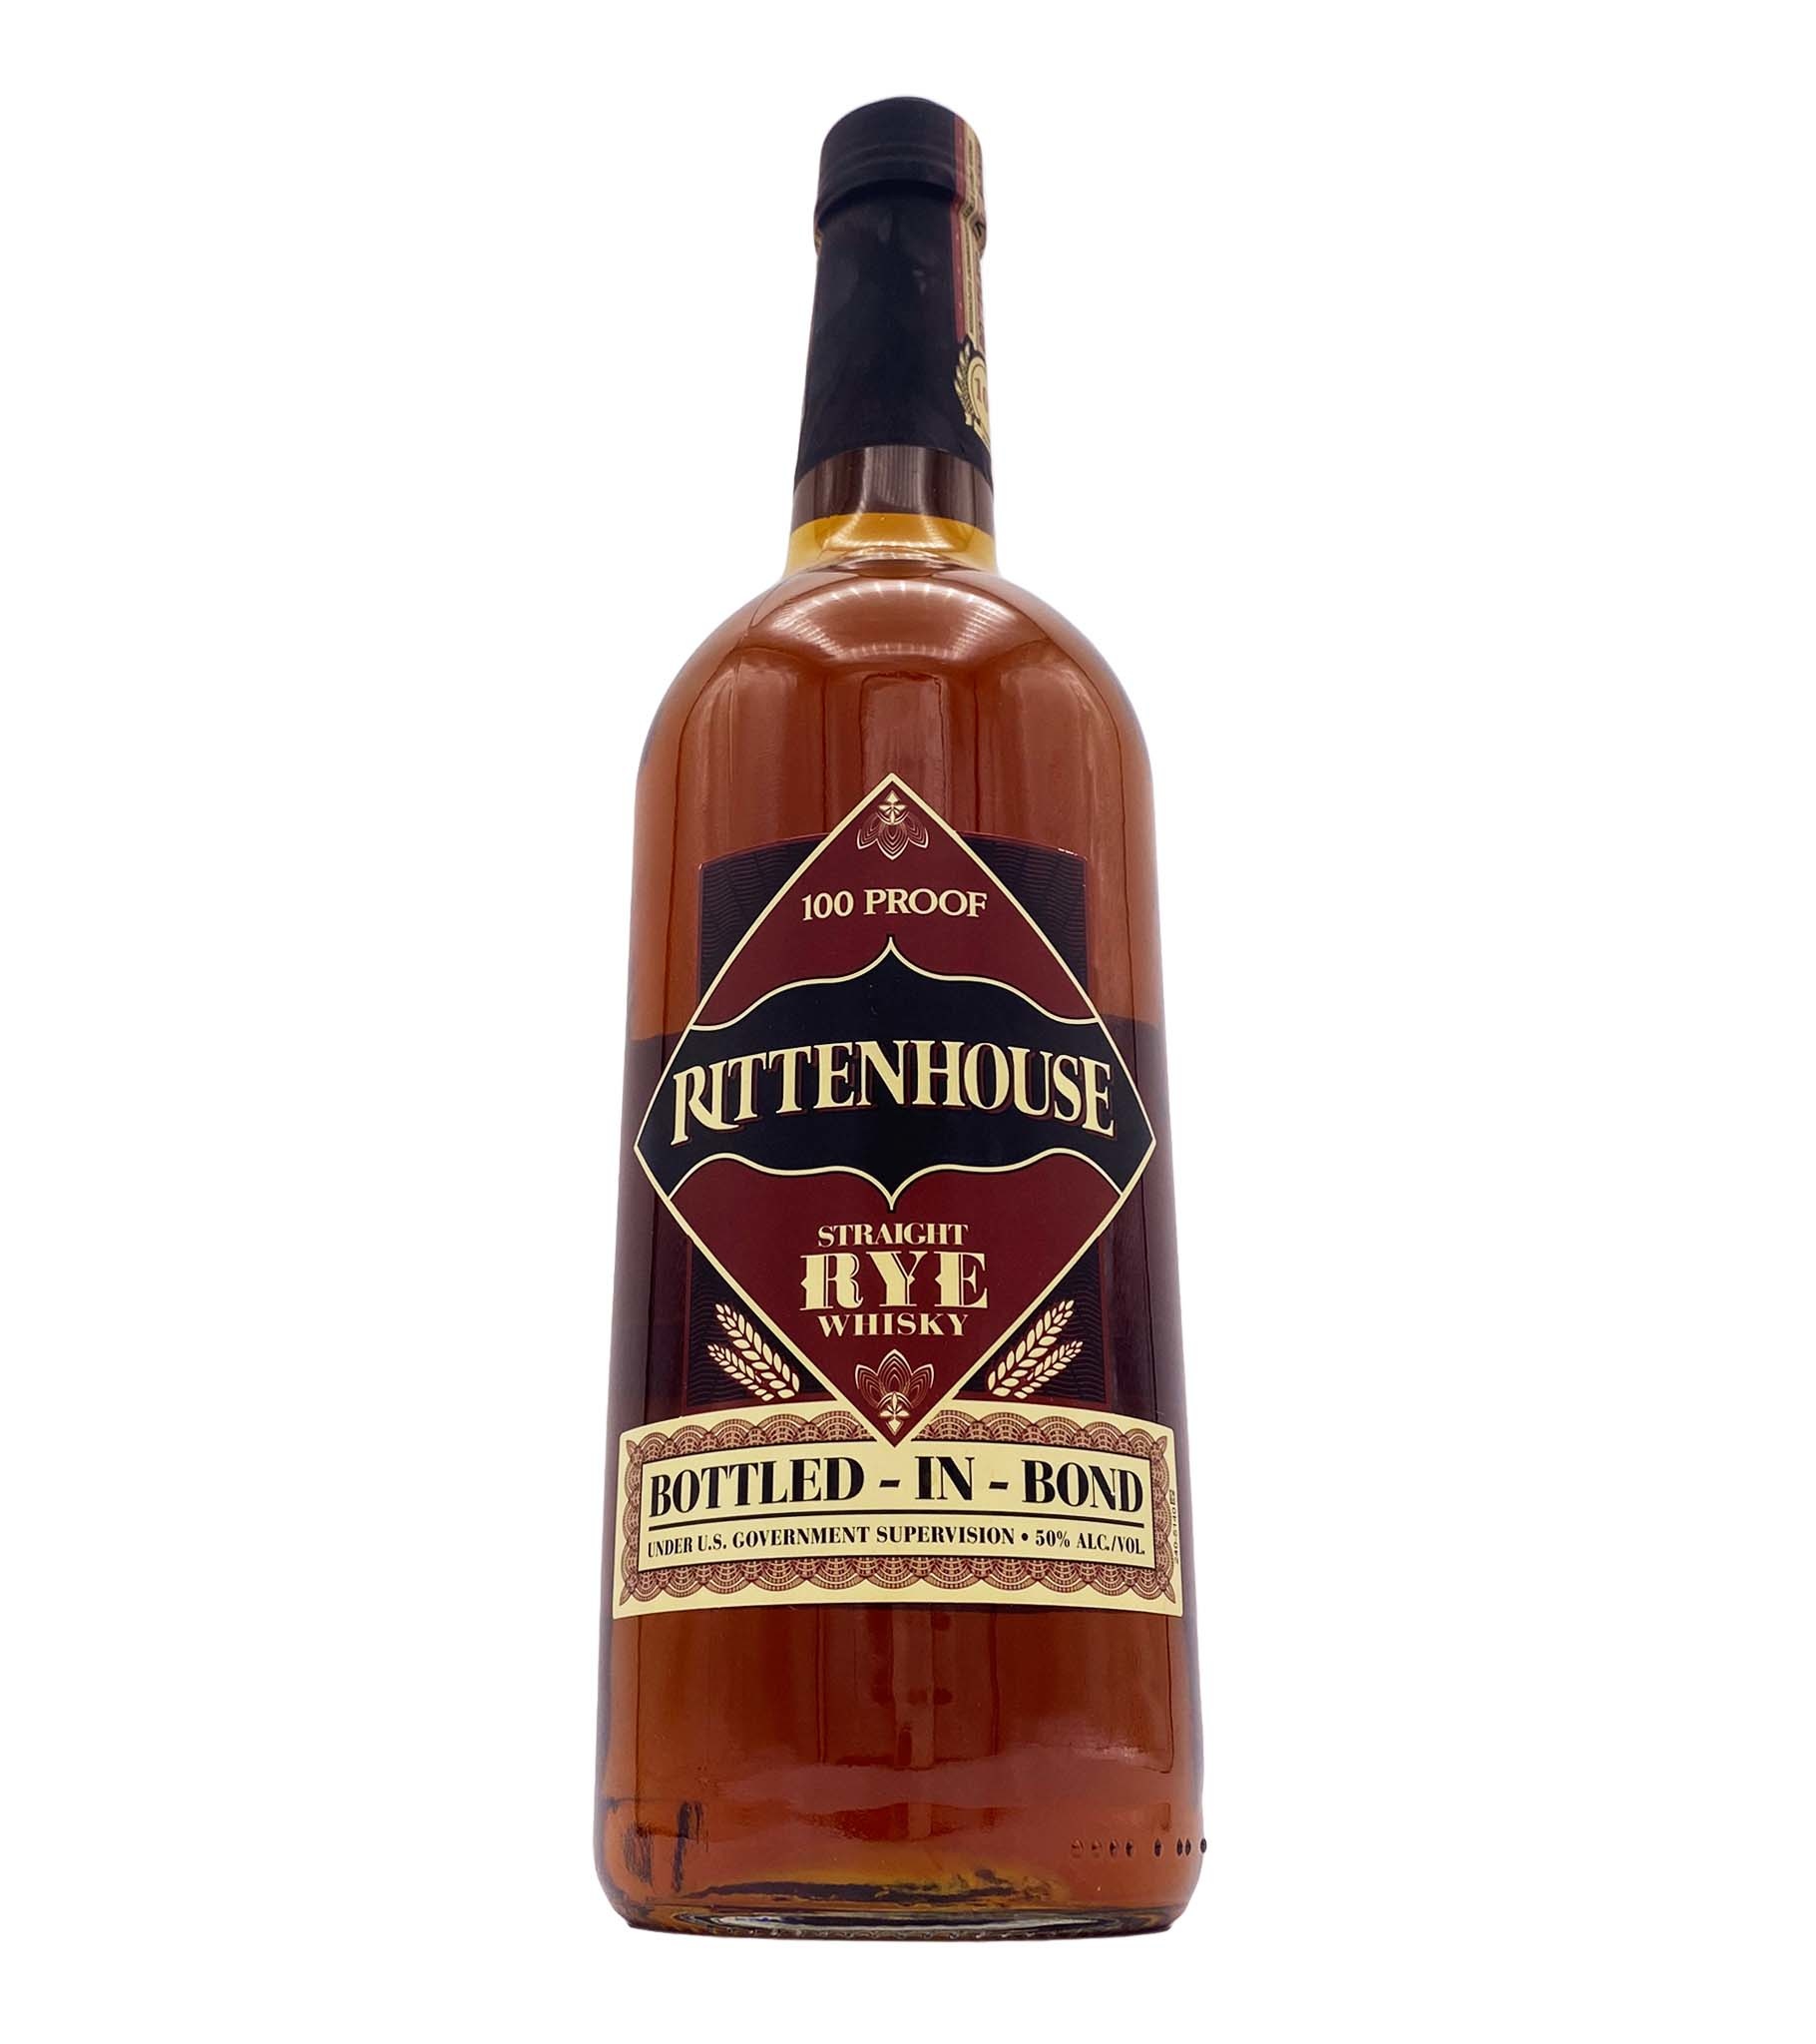 Rittenhouse Straight Rye, Bottled in Bond, 1L